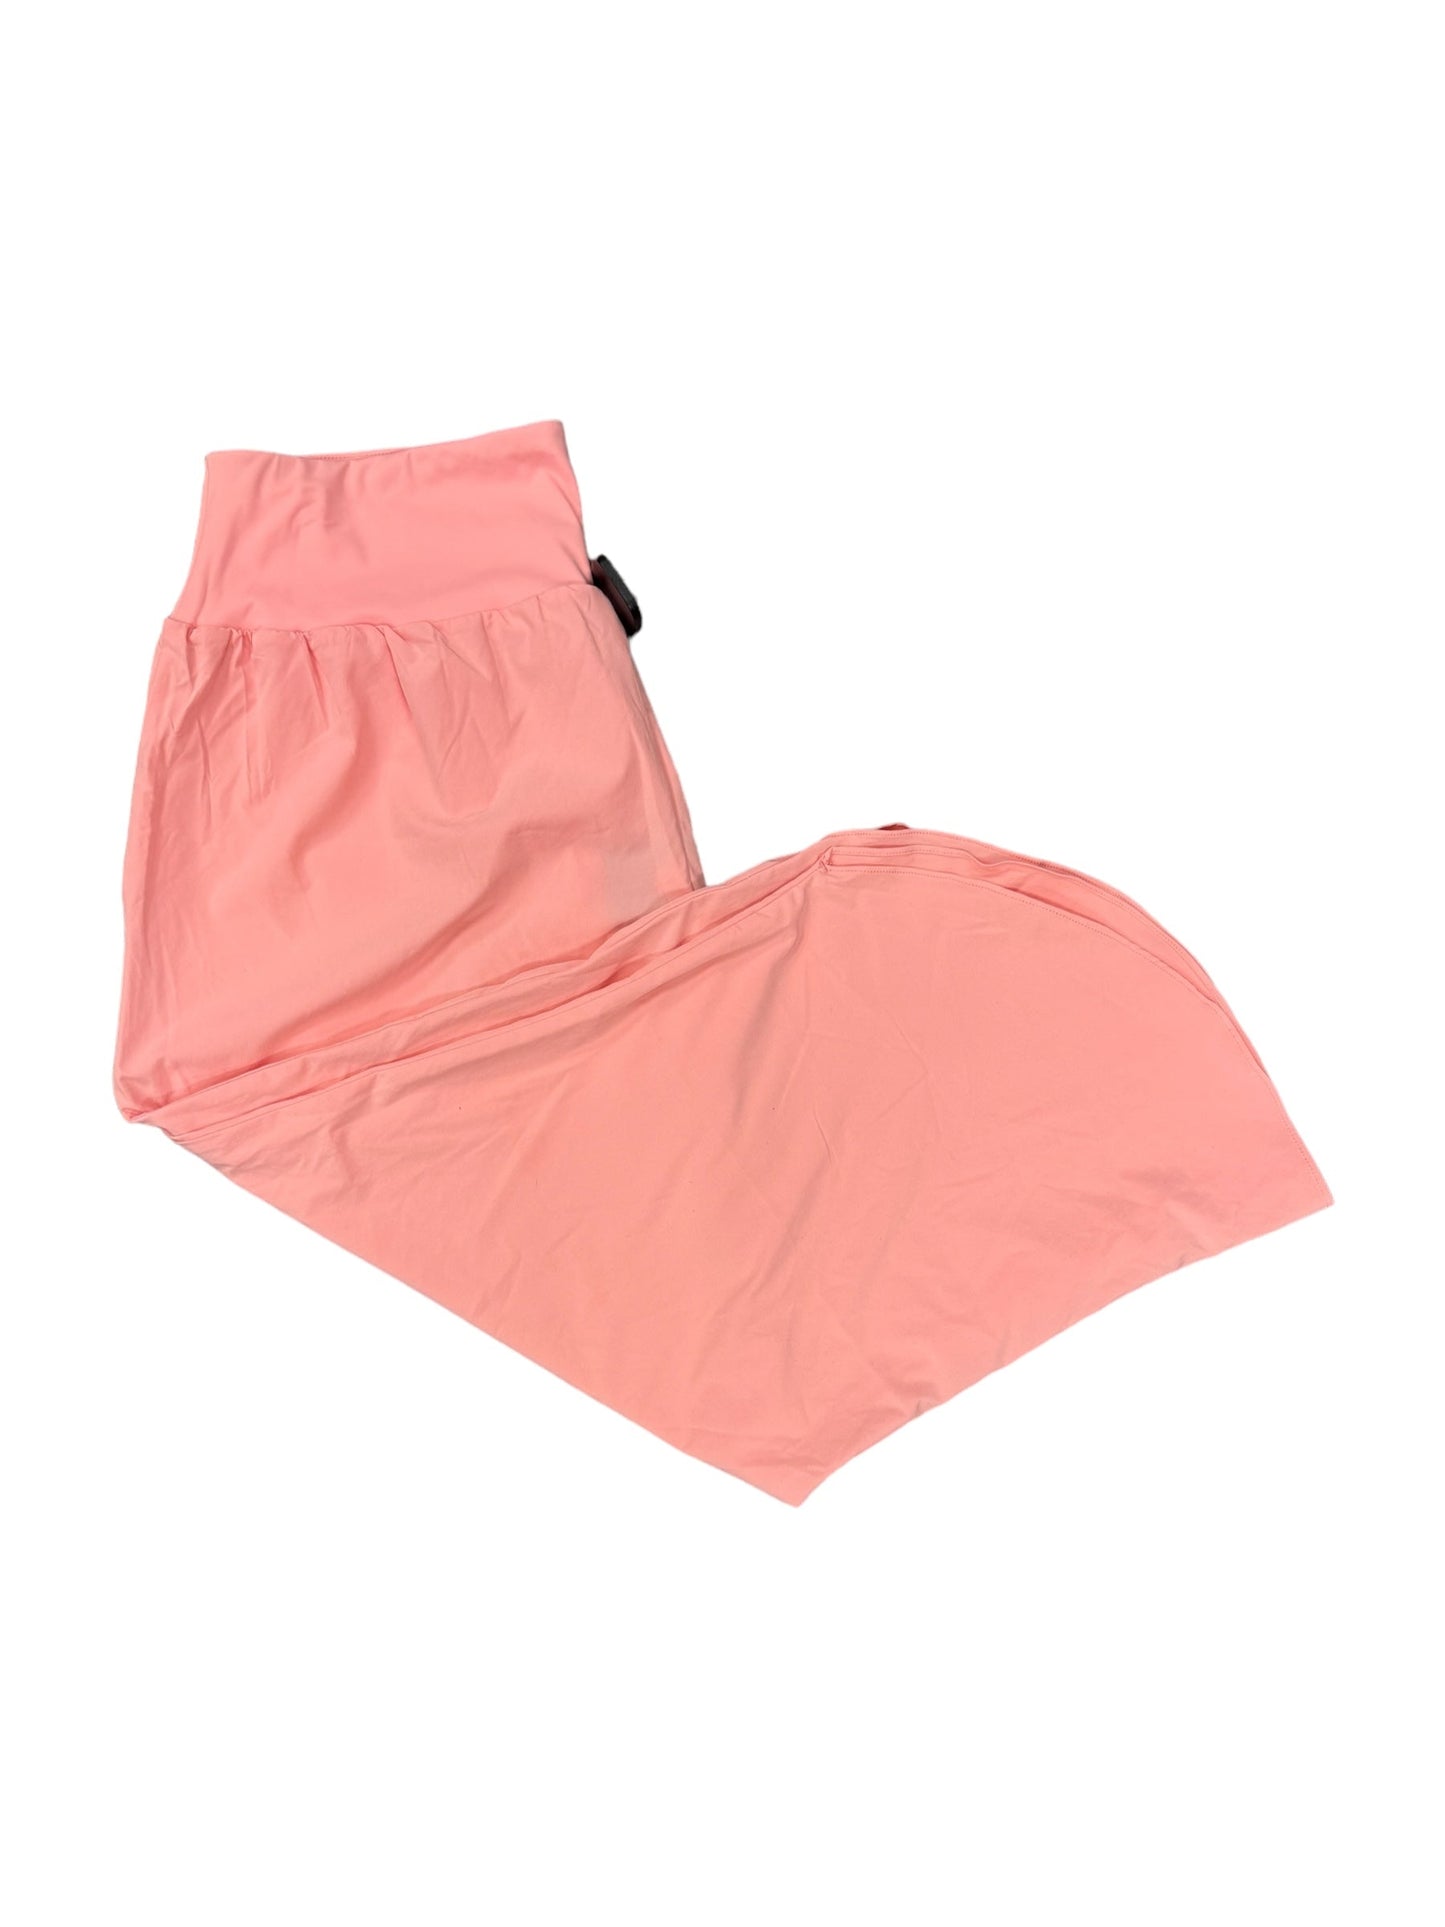 Peach Athletic Pants Cmc, Size Xl